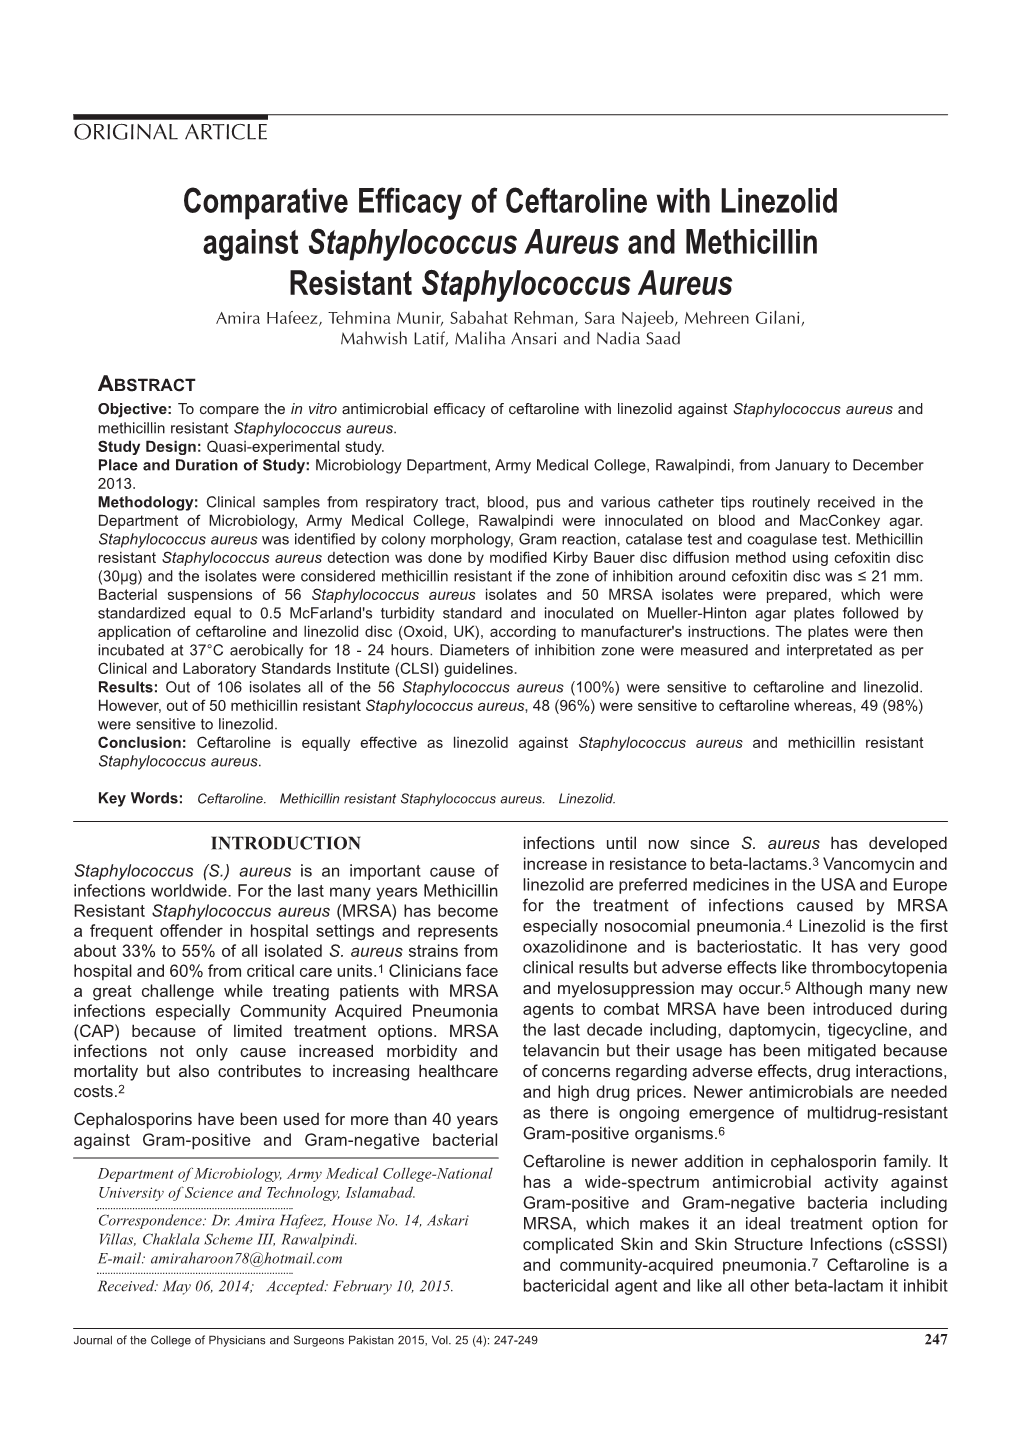 Comparative Efficacy of Ceftaroline with Linezolid Against Staphylococcus Aureus and Methicillin Resistant Staphylococcus Aureus